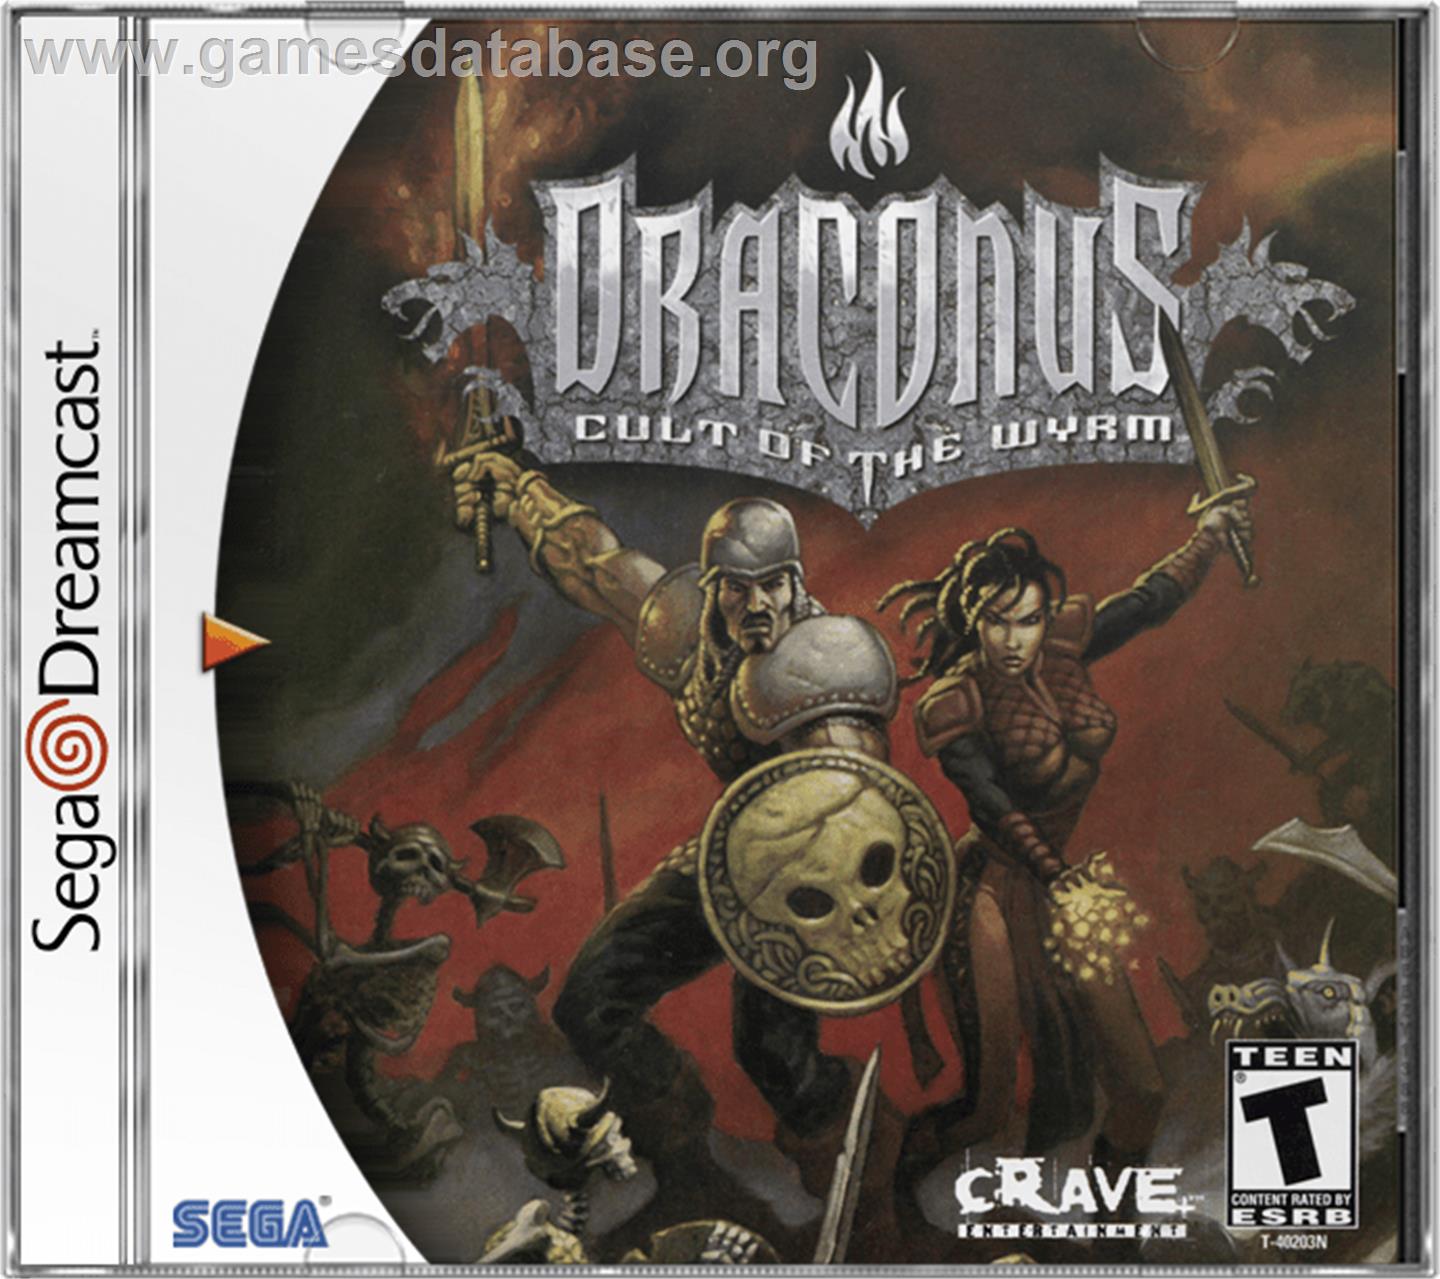 Draconus: Cult of the Wyrm - Sega Dreamcast - Artwork - Box